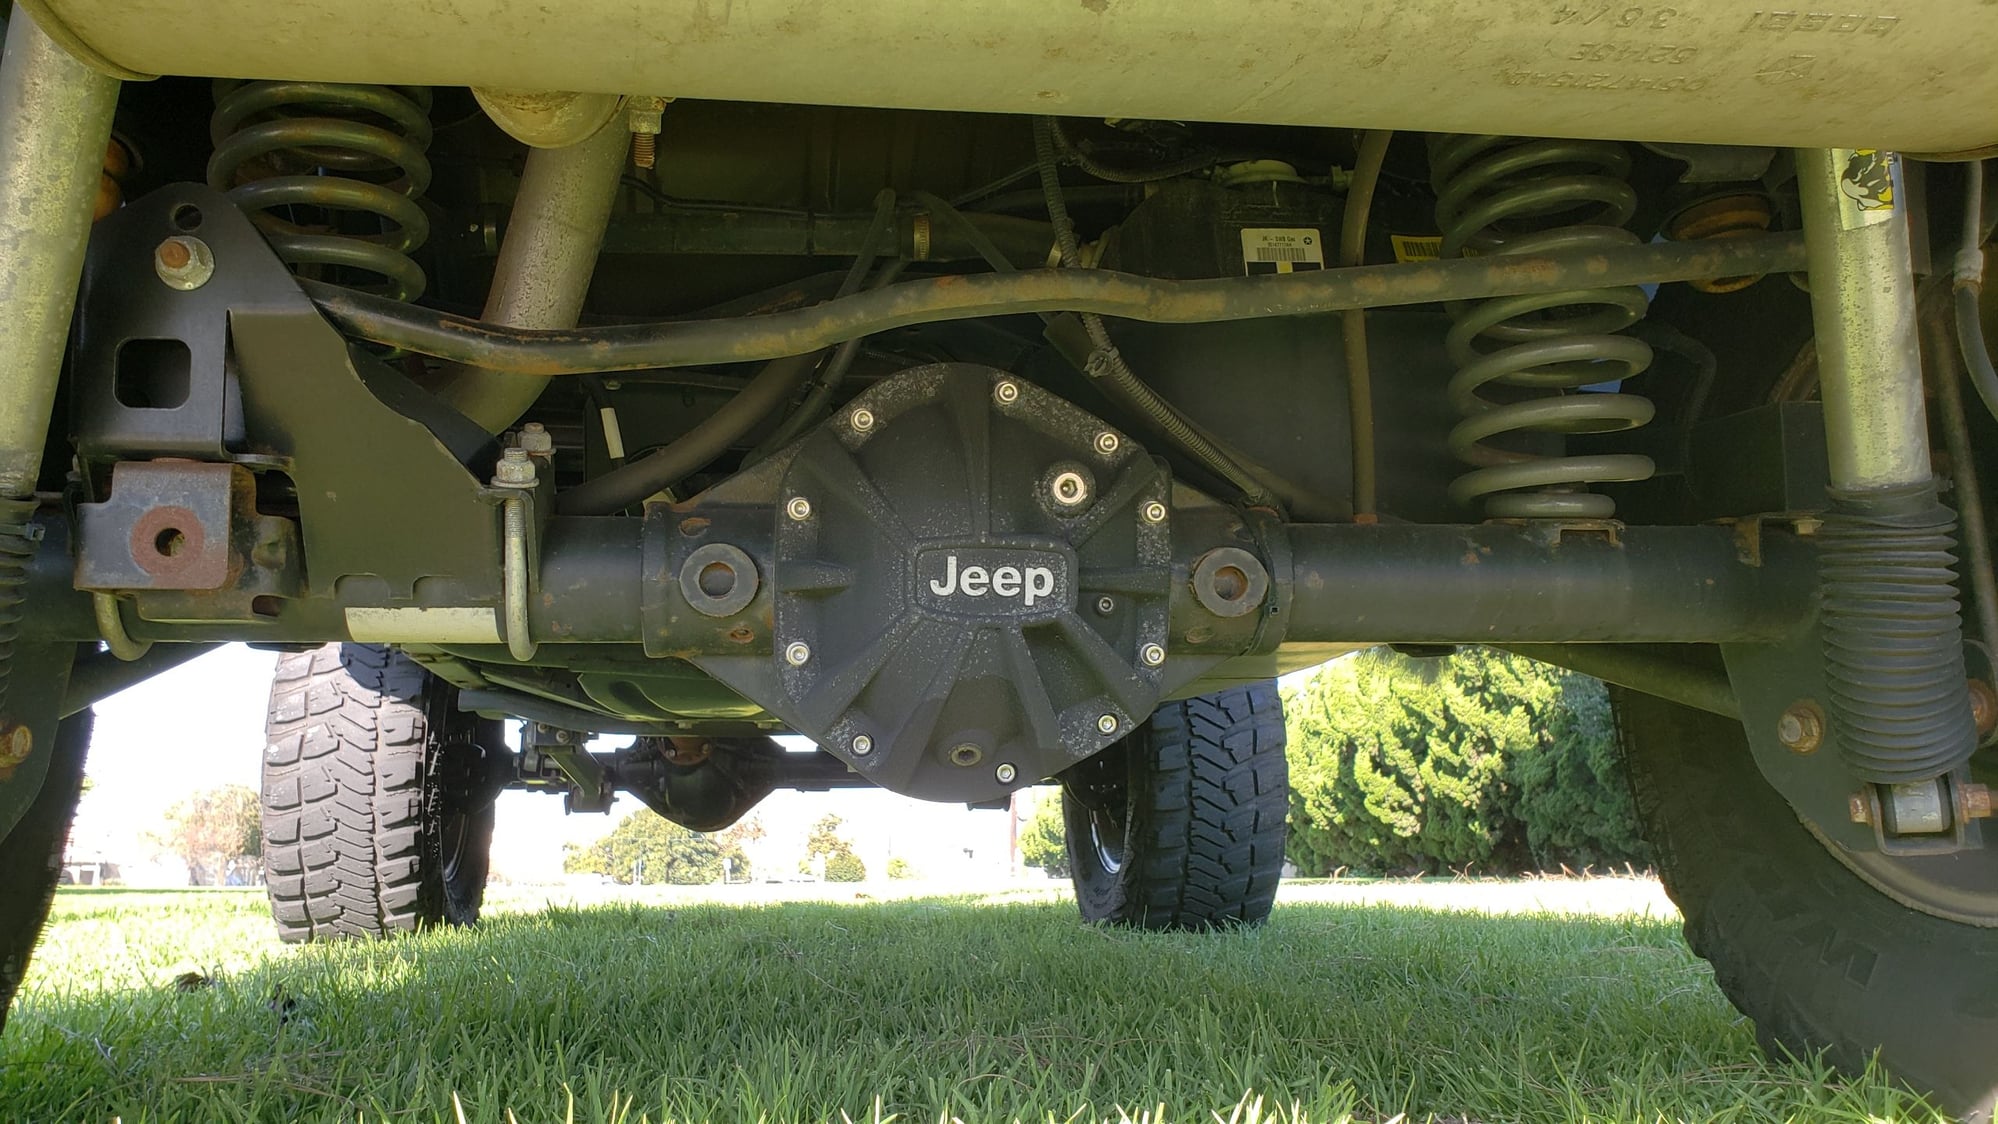 2014 Jeep Wrangler - 2014 AEV Jeep Wrangler JK Rubicon - Used - VIN 1C4BJWCG9EL241546 - 41,900 Miles - 6 cyl - 4WD - Automatic - SUV - Black - El Segundo, CA 90245, United States